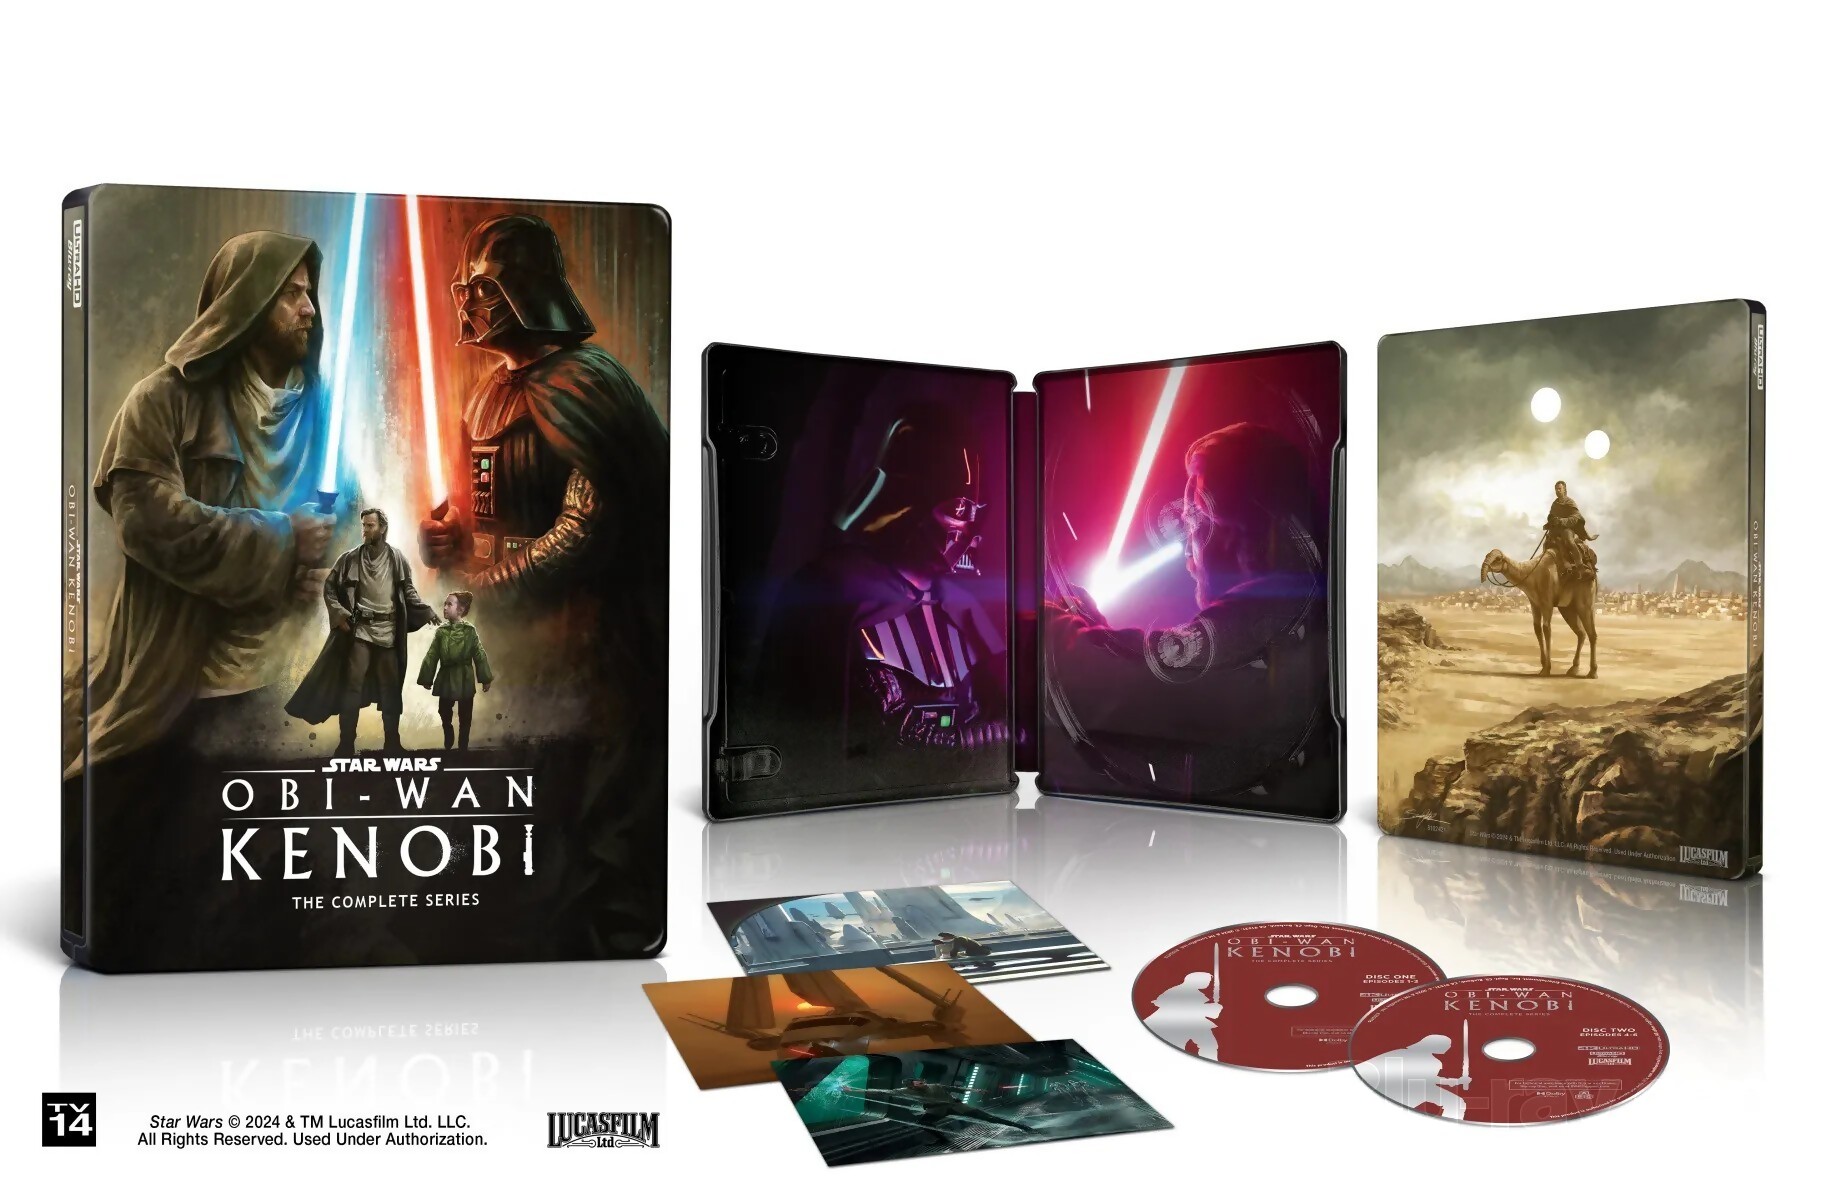 Obi-Wan Kenobi: The Complete Series Releasing In 4k Blu-ray/Blu-ray SteelBook Edition 